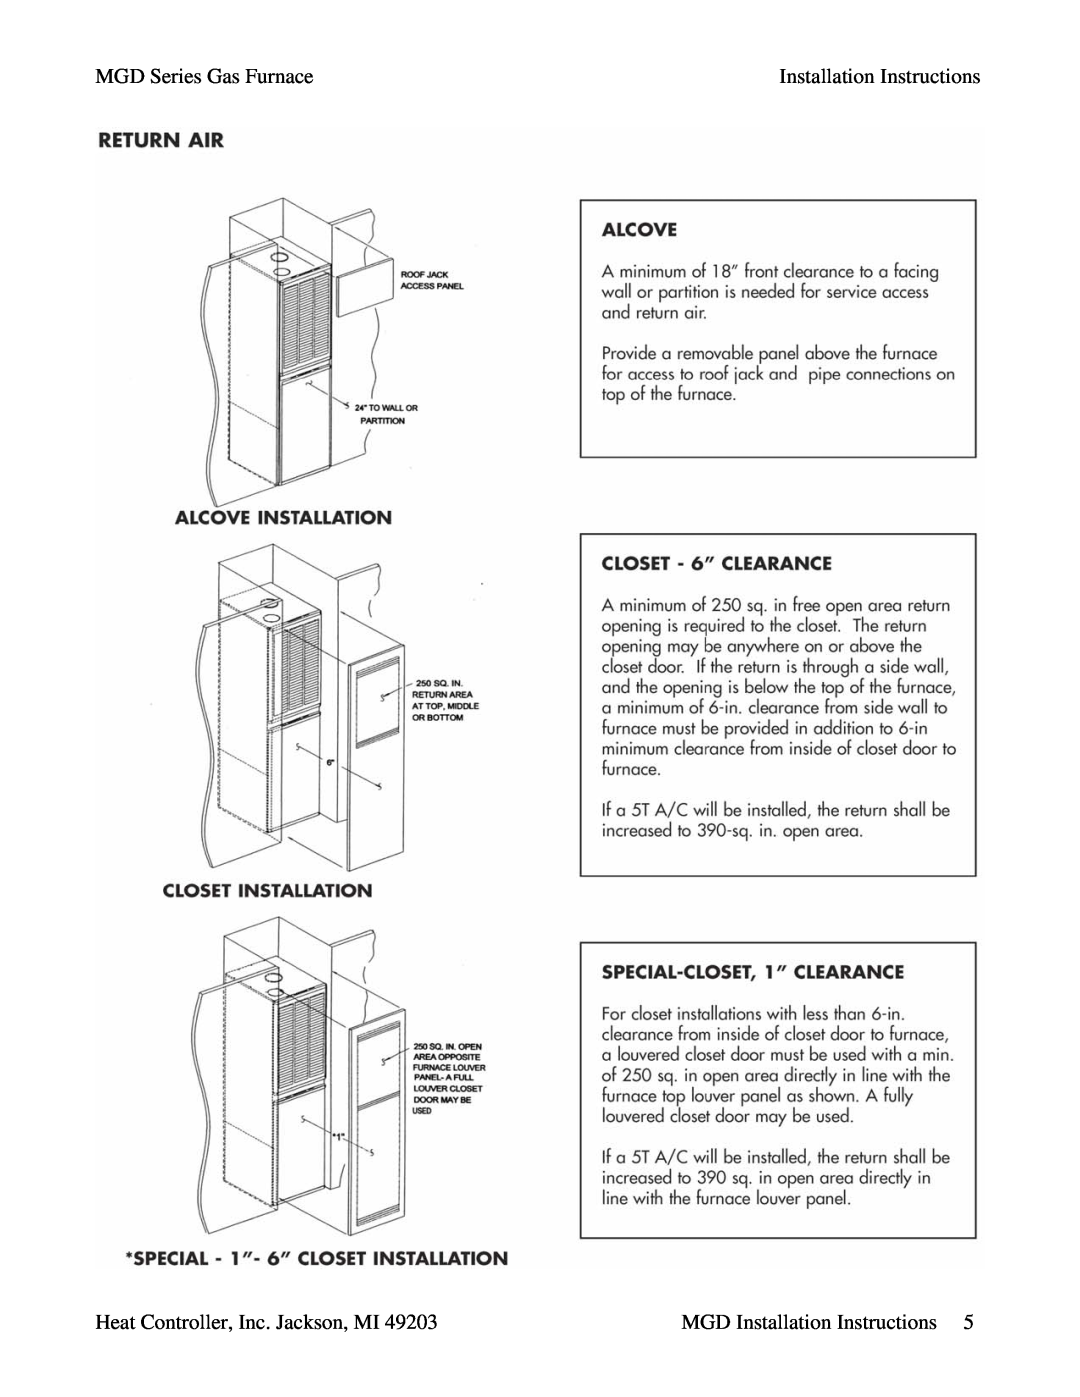 Heat Controller MGD75-E3A, MGD90-E5A MGD Series Gas Furnace, Installation Instructions, Heat Controller, Inc. Jackson, MI 